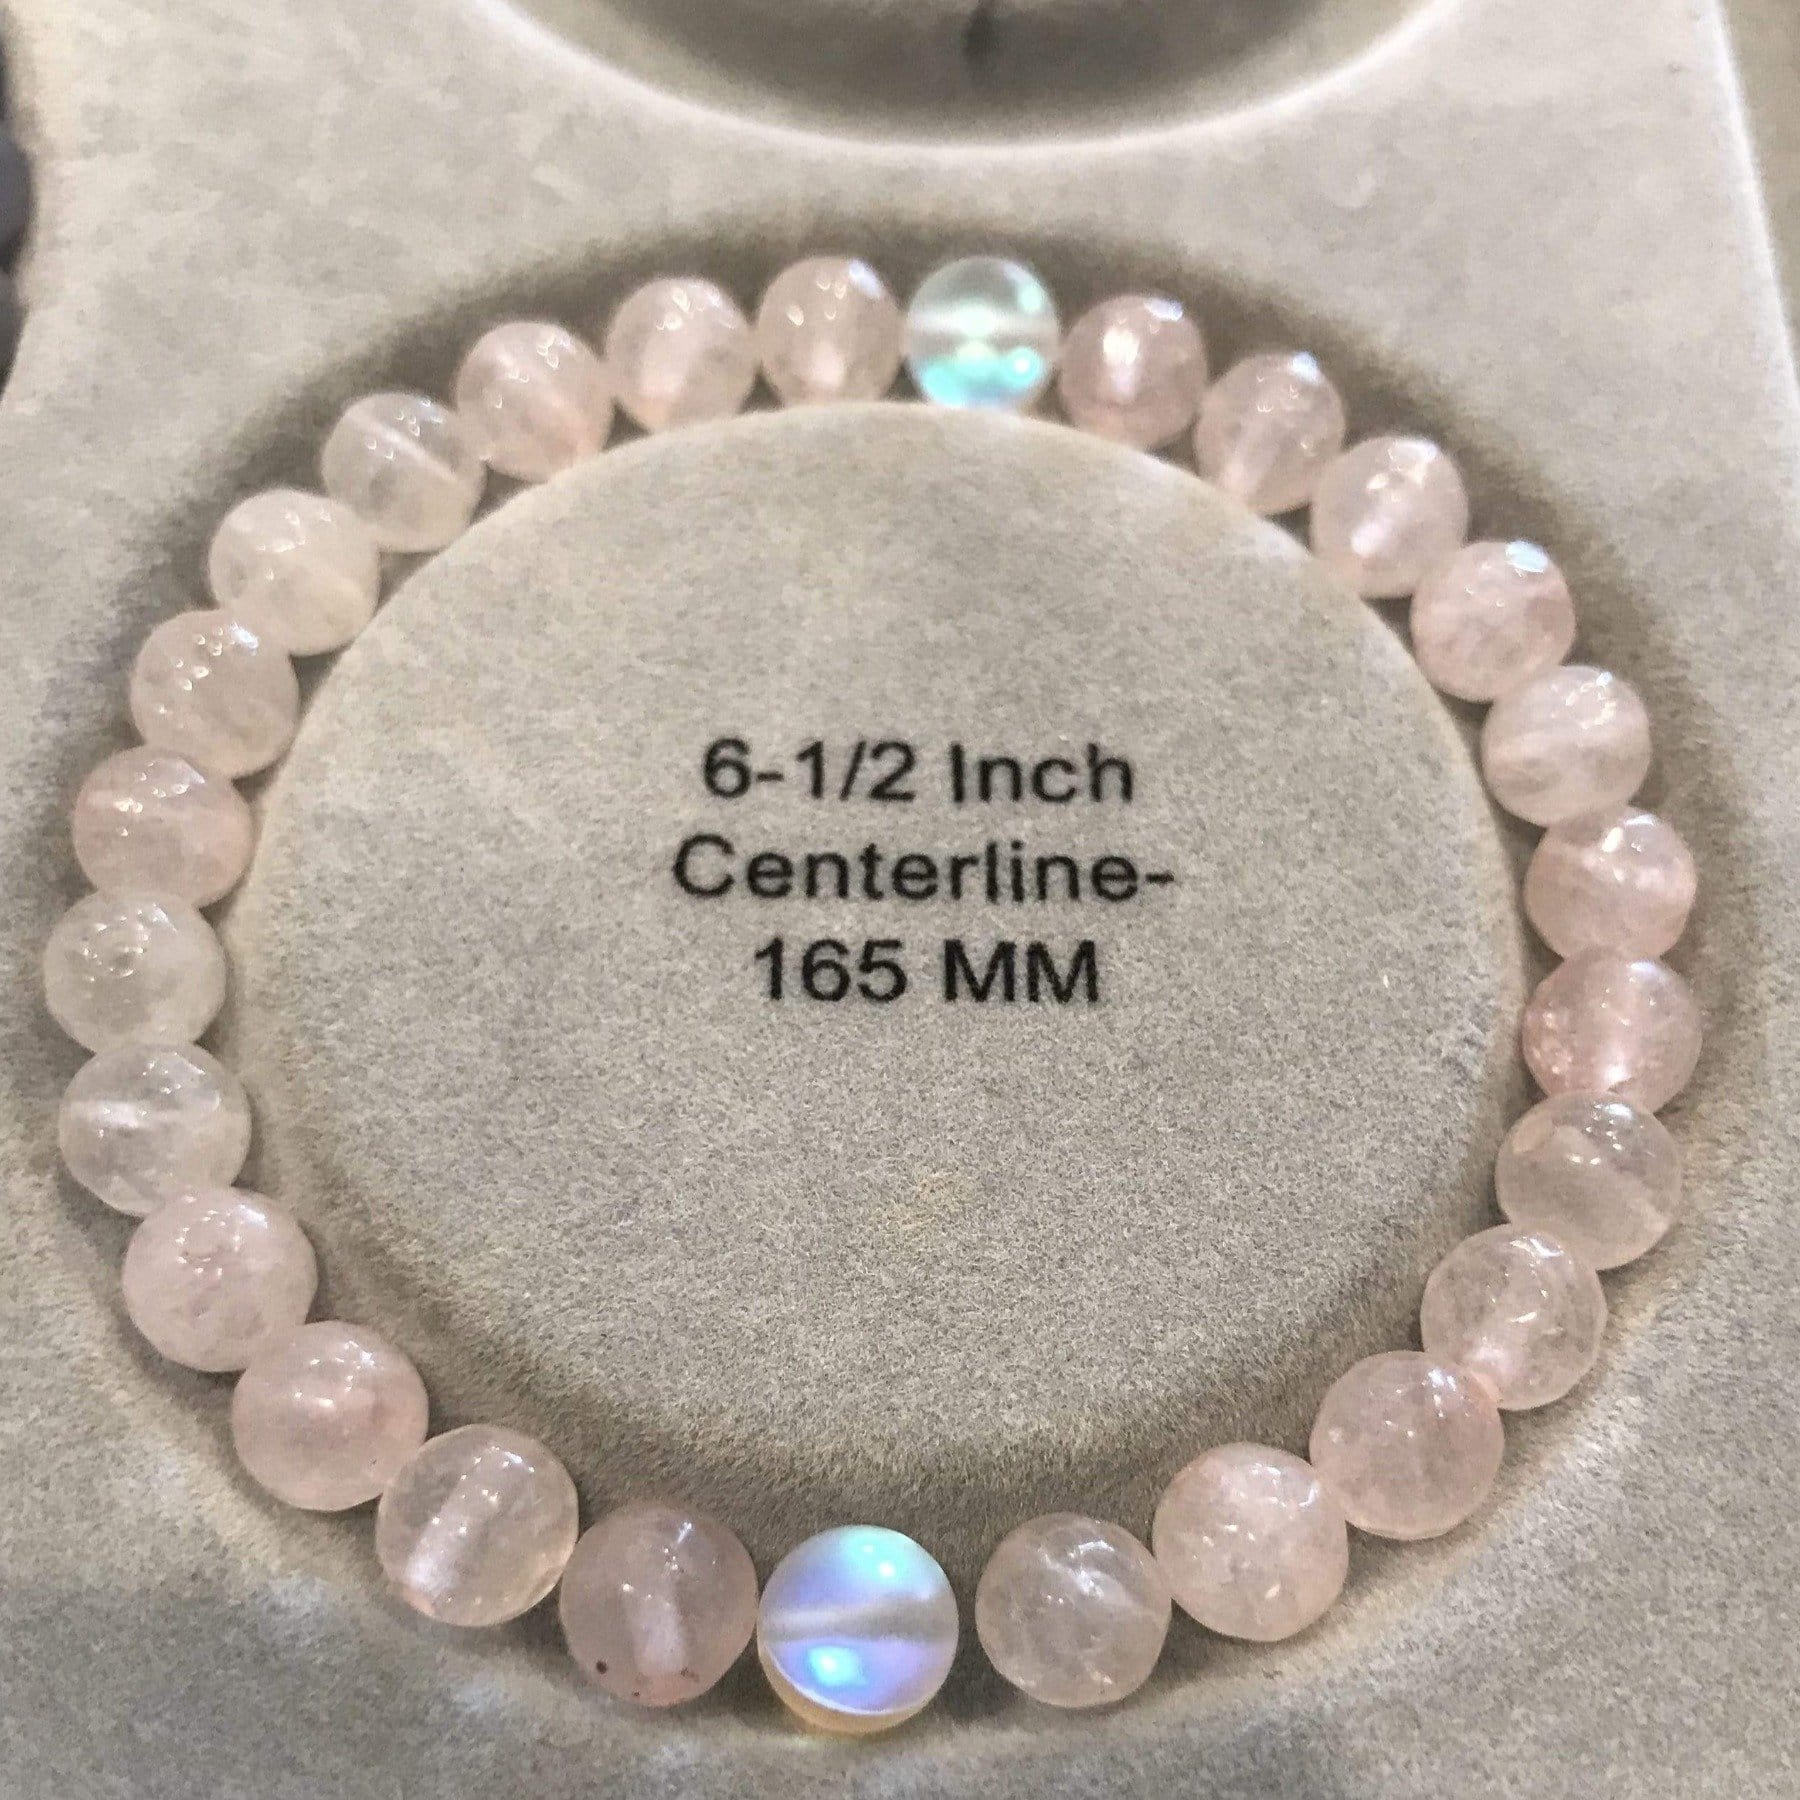 Customer in process of creating their MaeMae custom stone bracelet.